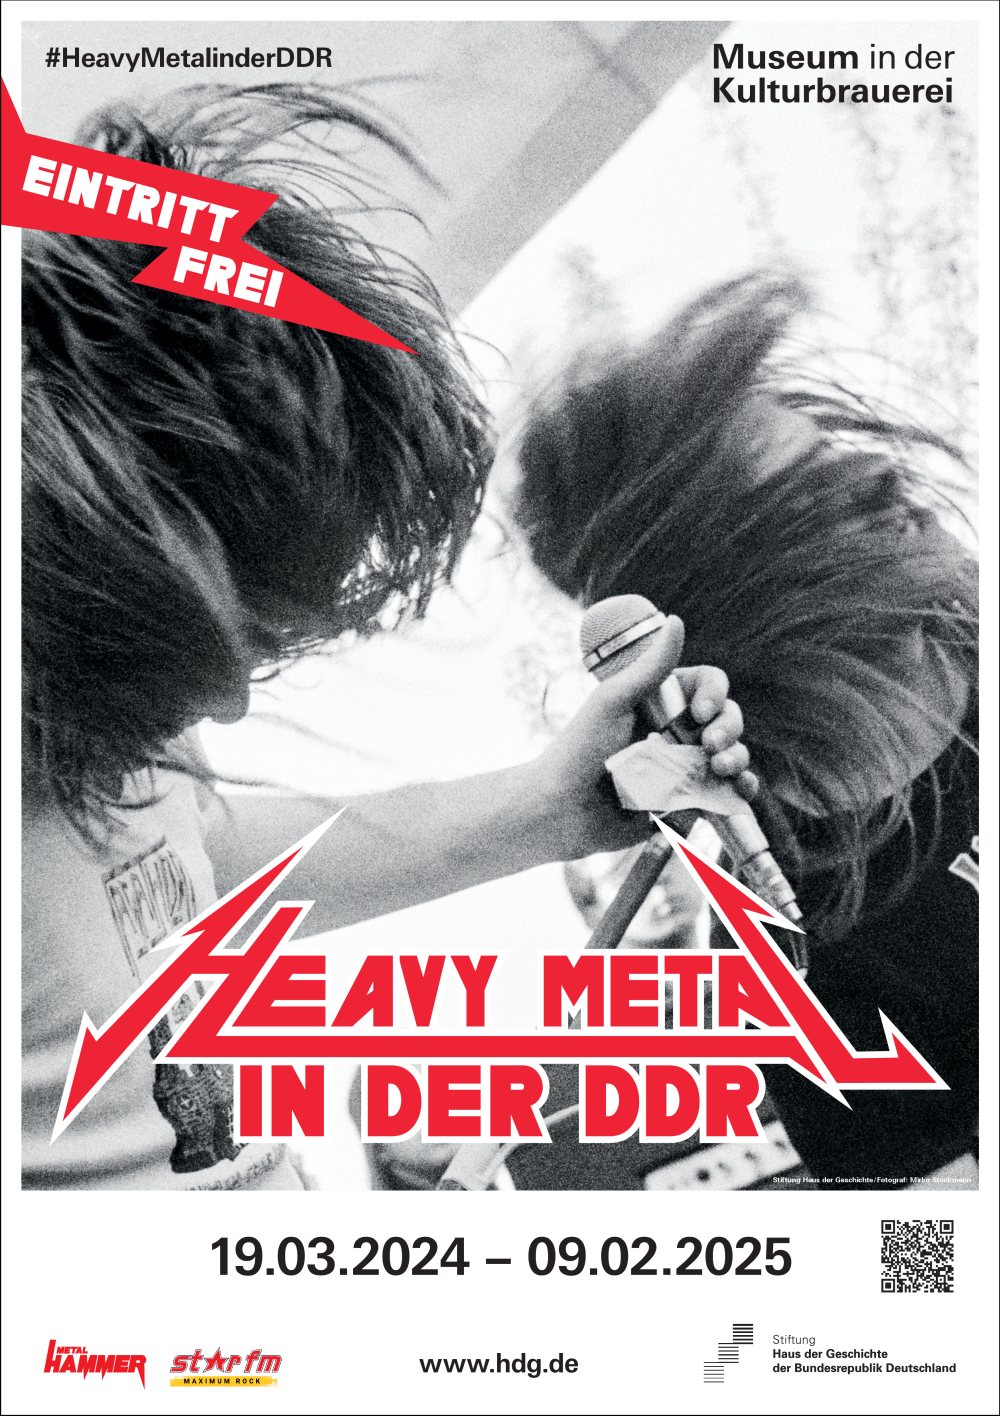 [Bild: META_Metal-in-der-DDR_Plakat.png]